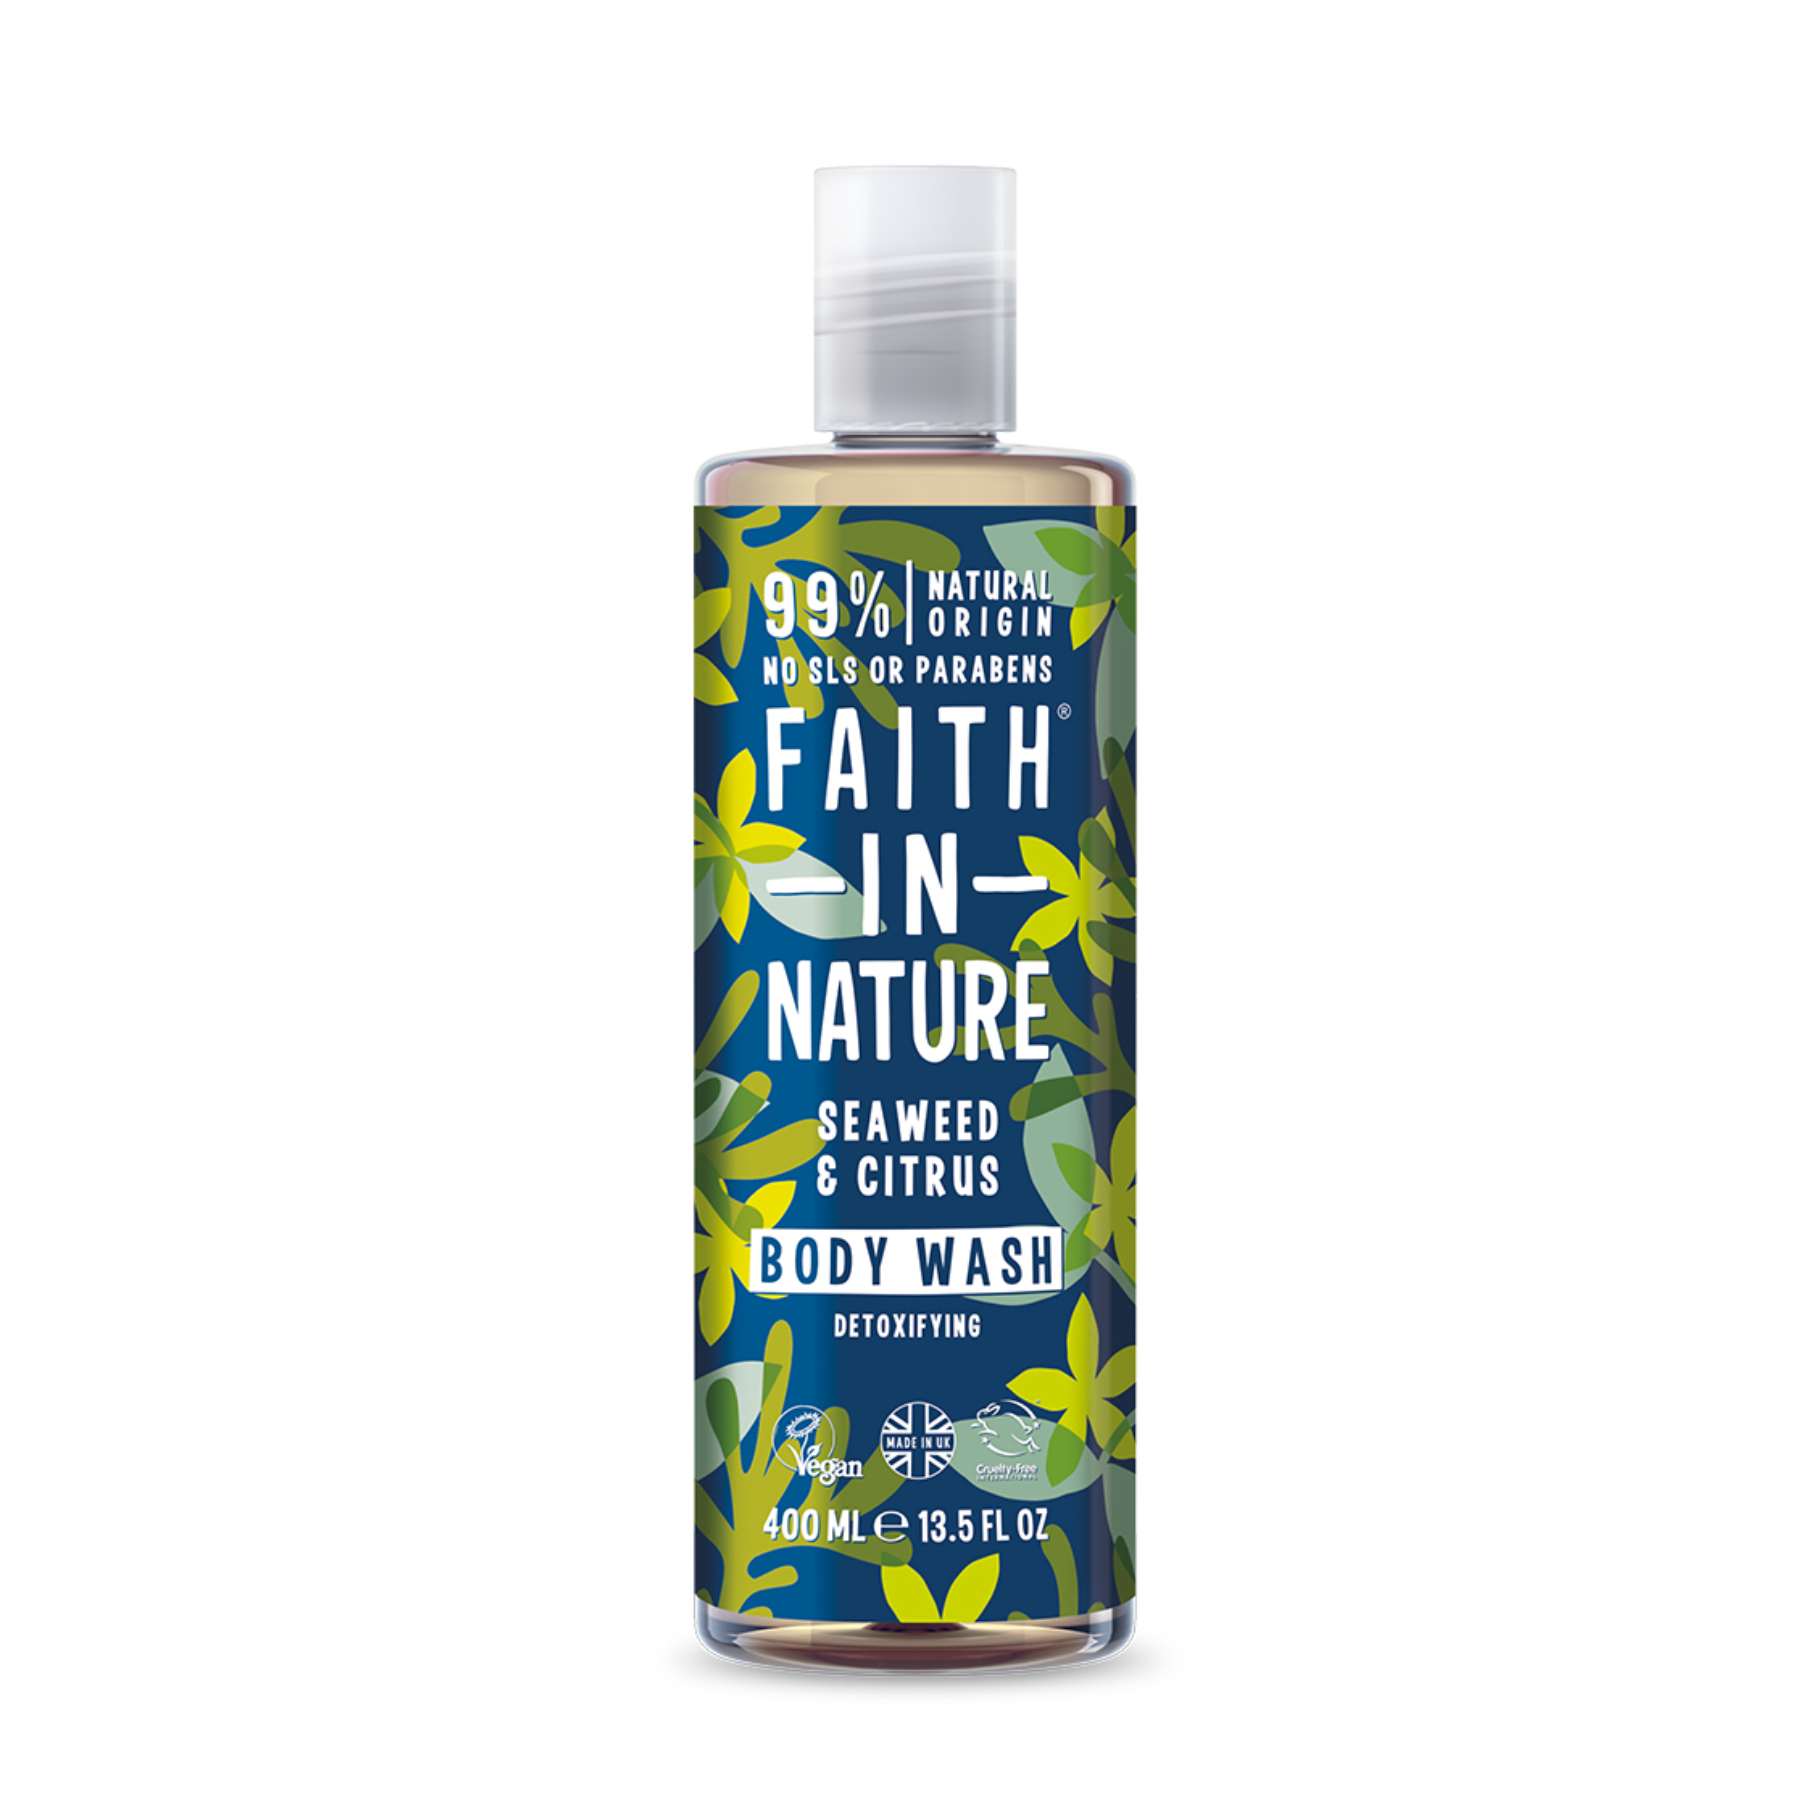 Shop Faith in Nature Body Wash - Seaweed & Citrus 400 ml on Sublime Life. Detoxifying body wash with Seaweed & Citrus